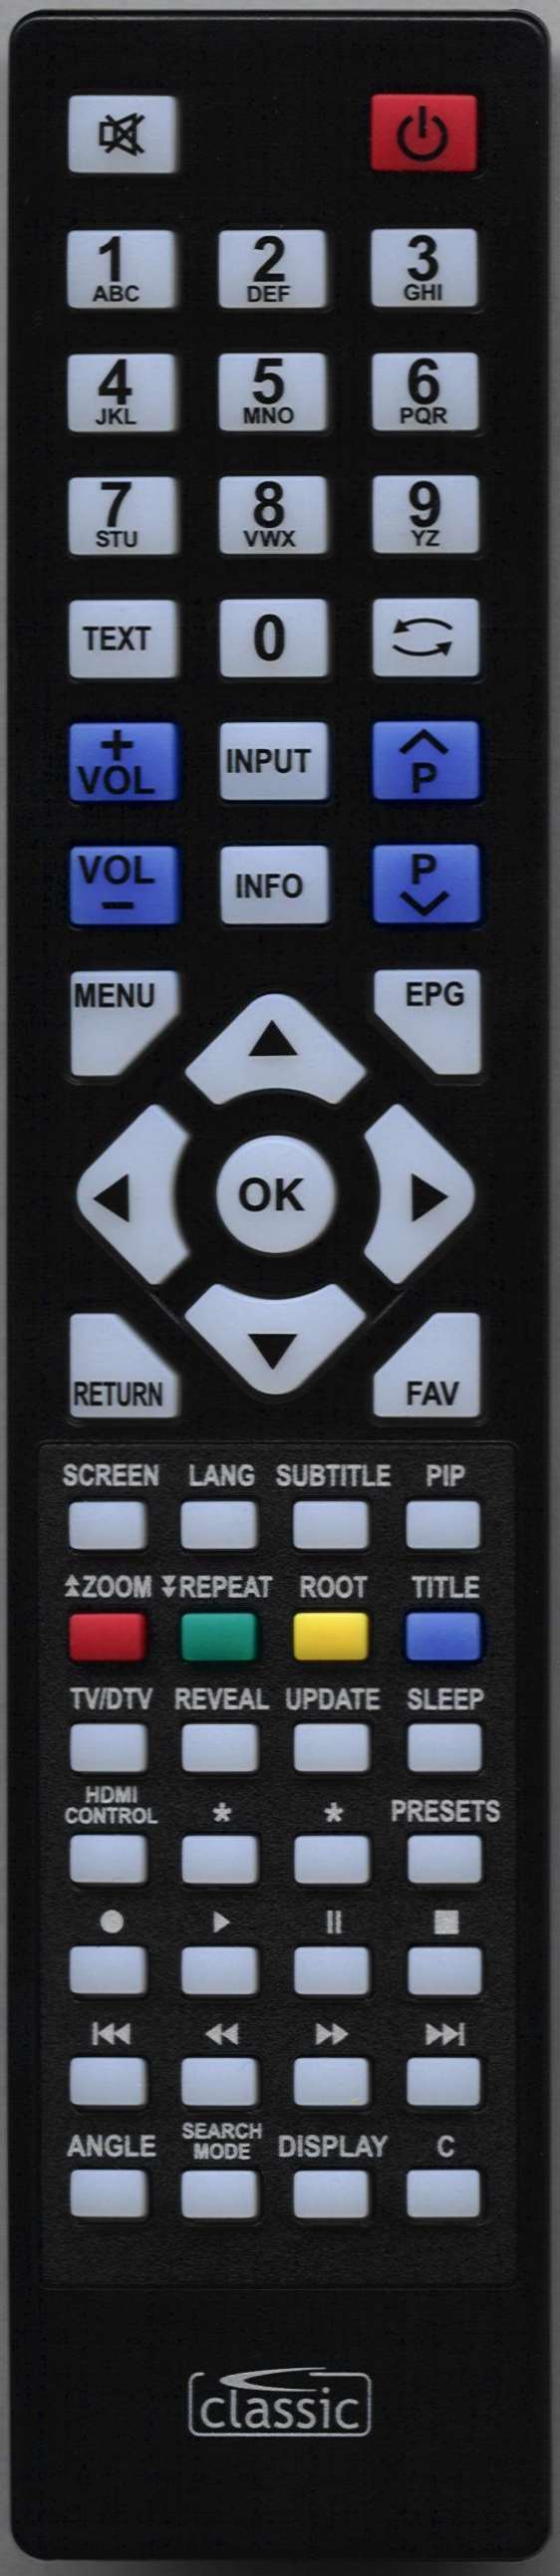 LUXOR 19822WHDDVDDIGITAL Remote Control Alternative